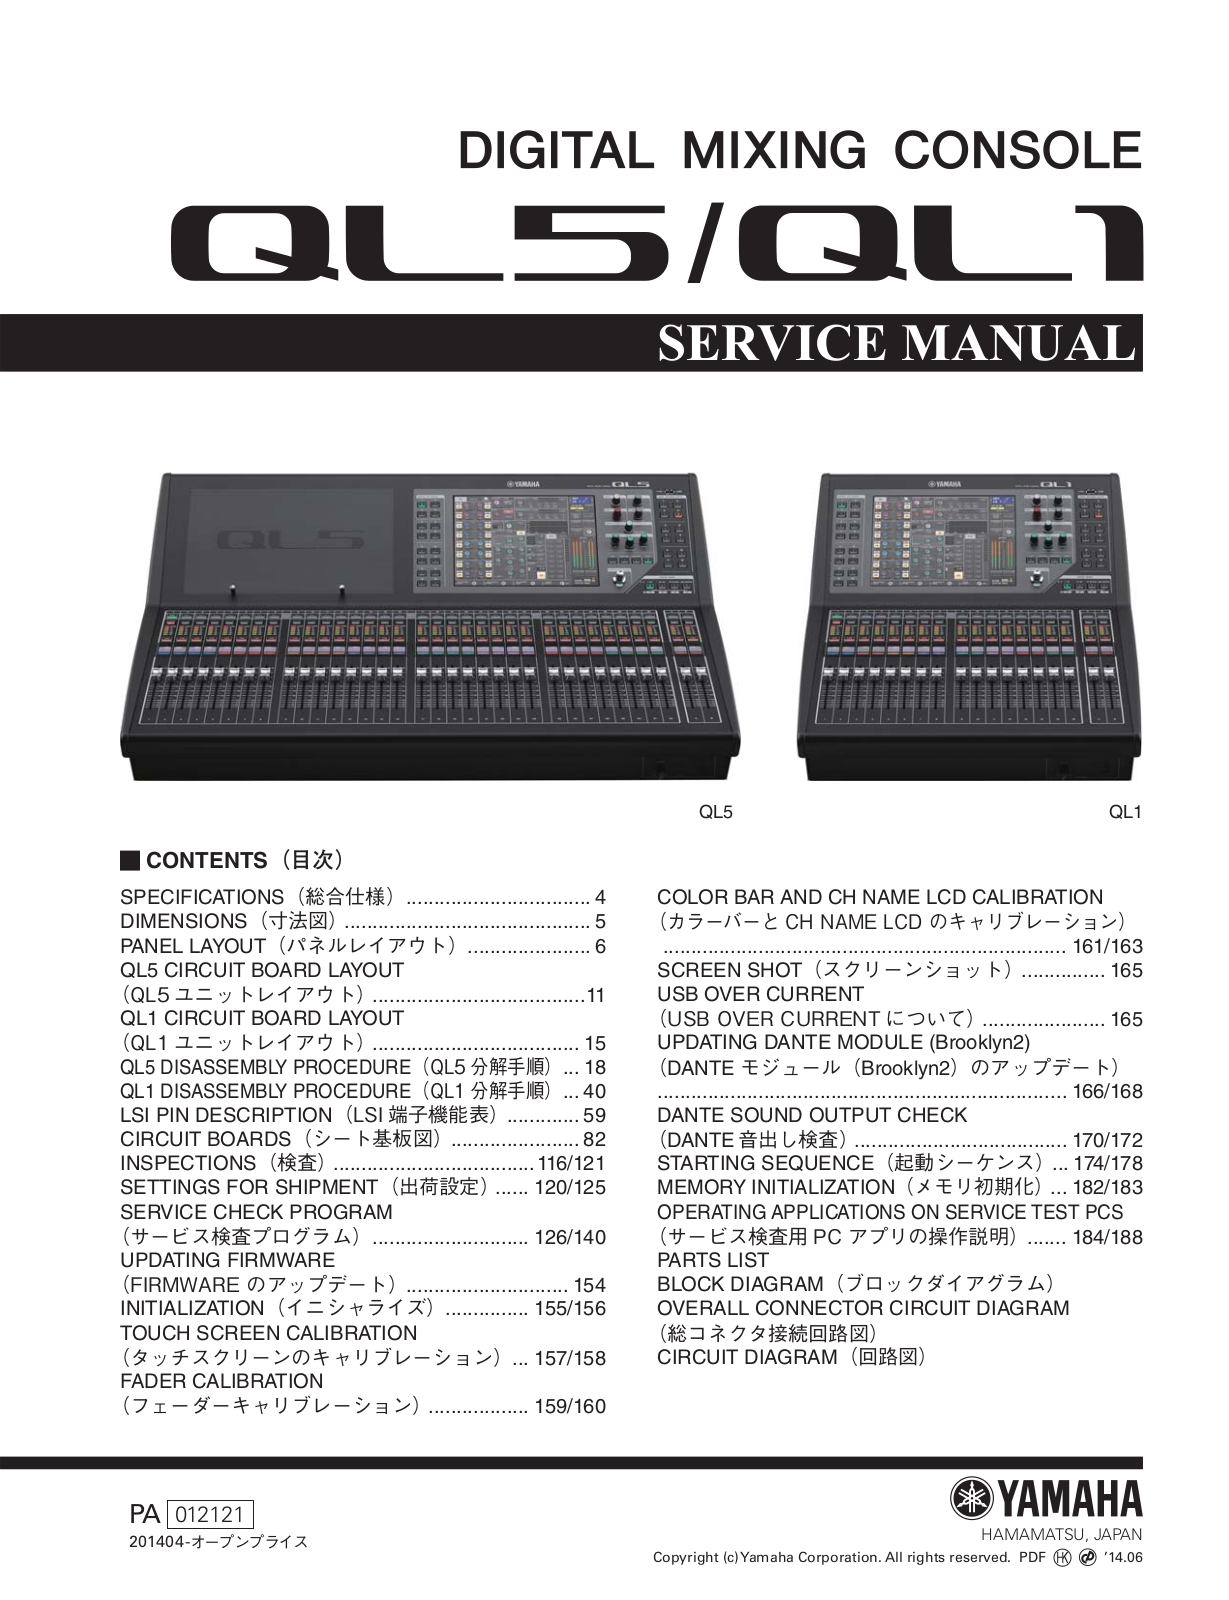 Yamaha QL1, QL5 Service Manual